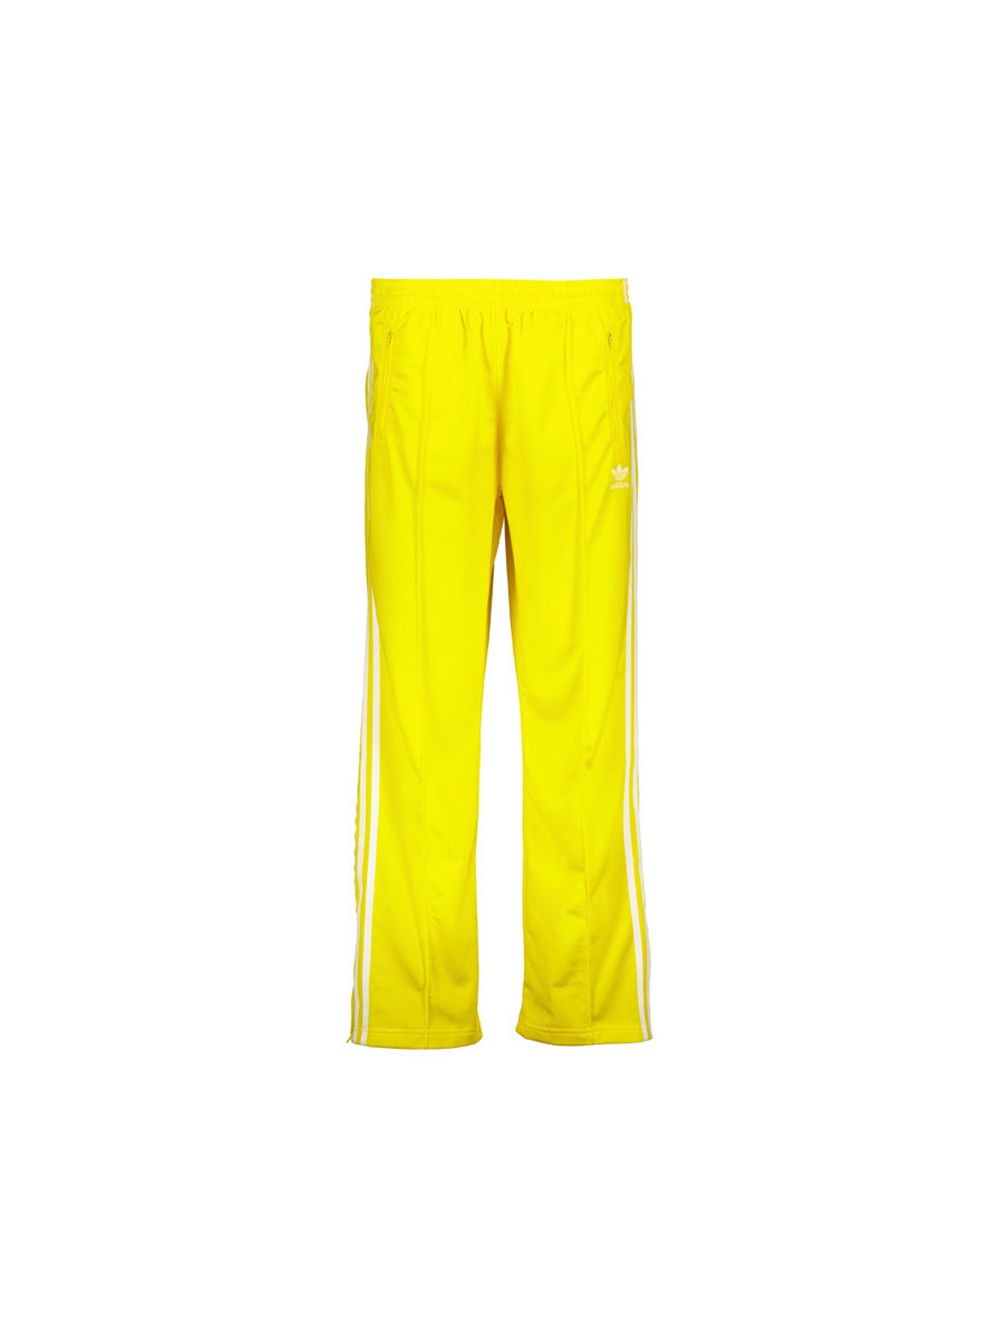 adidas firebird track pants yellow